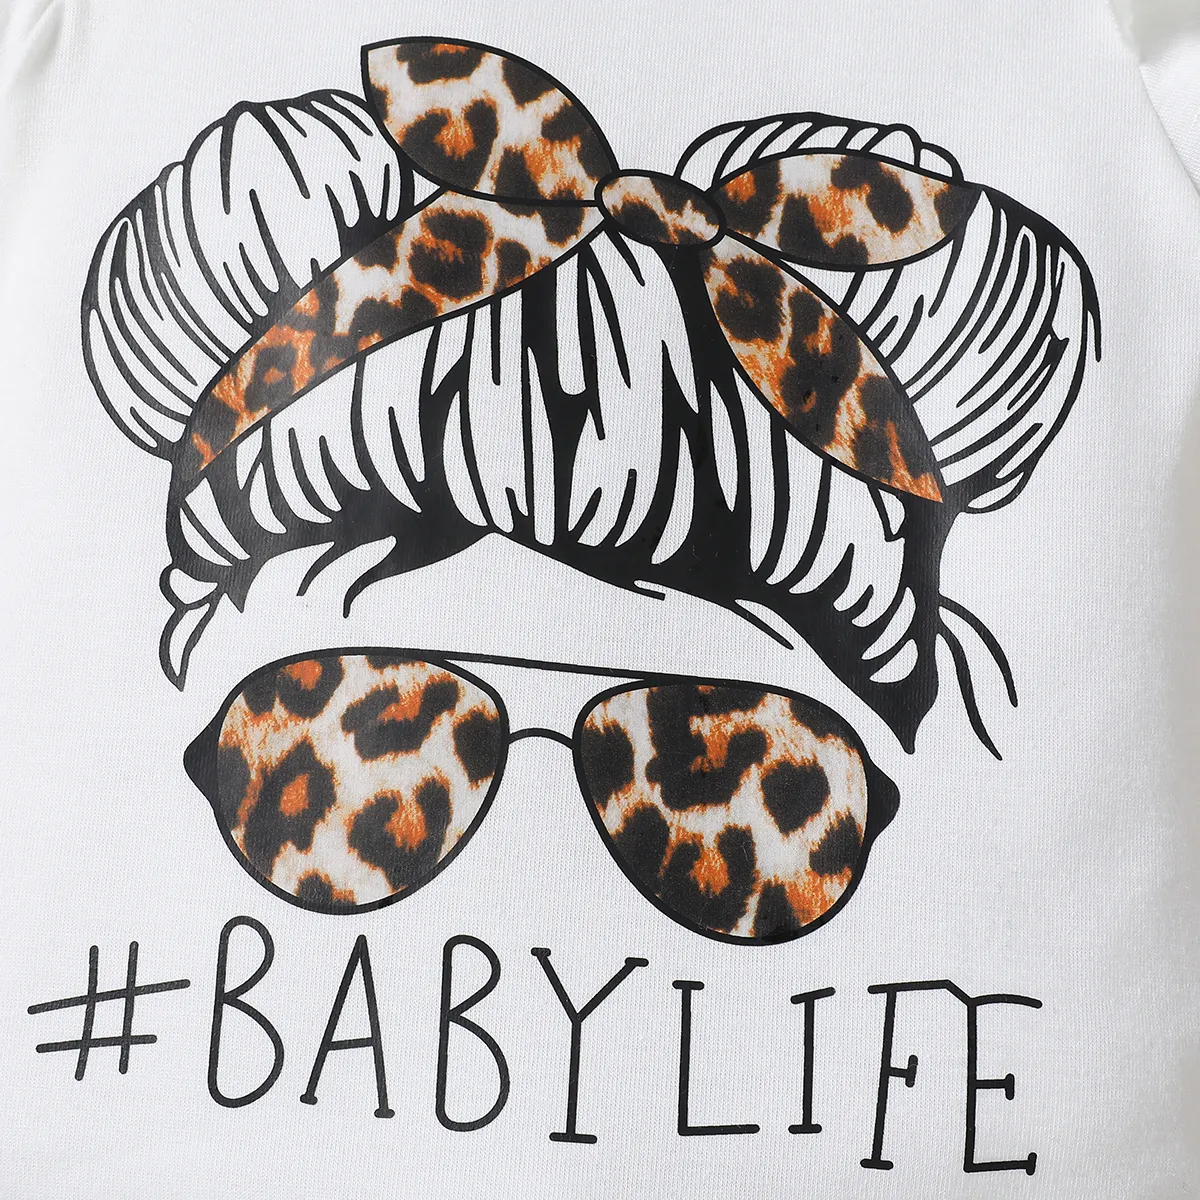 3pcs Baby Girl Ruffle Edge Leopard Print Top and Pants Set  Khaki big image 1